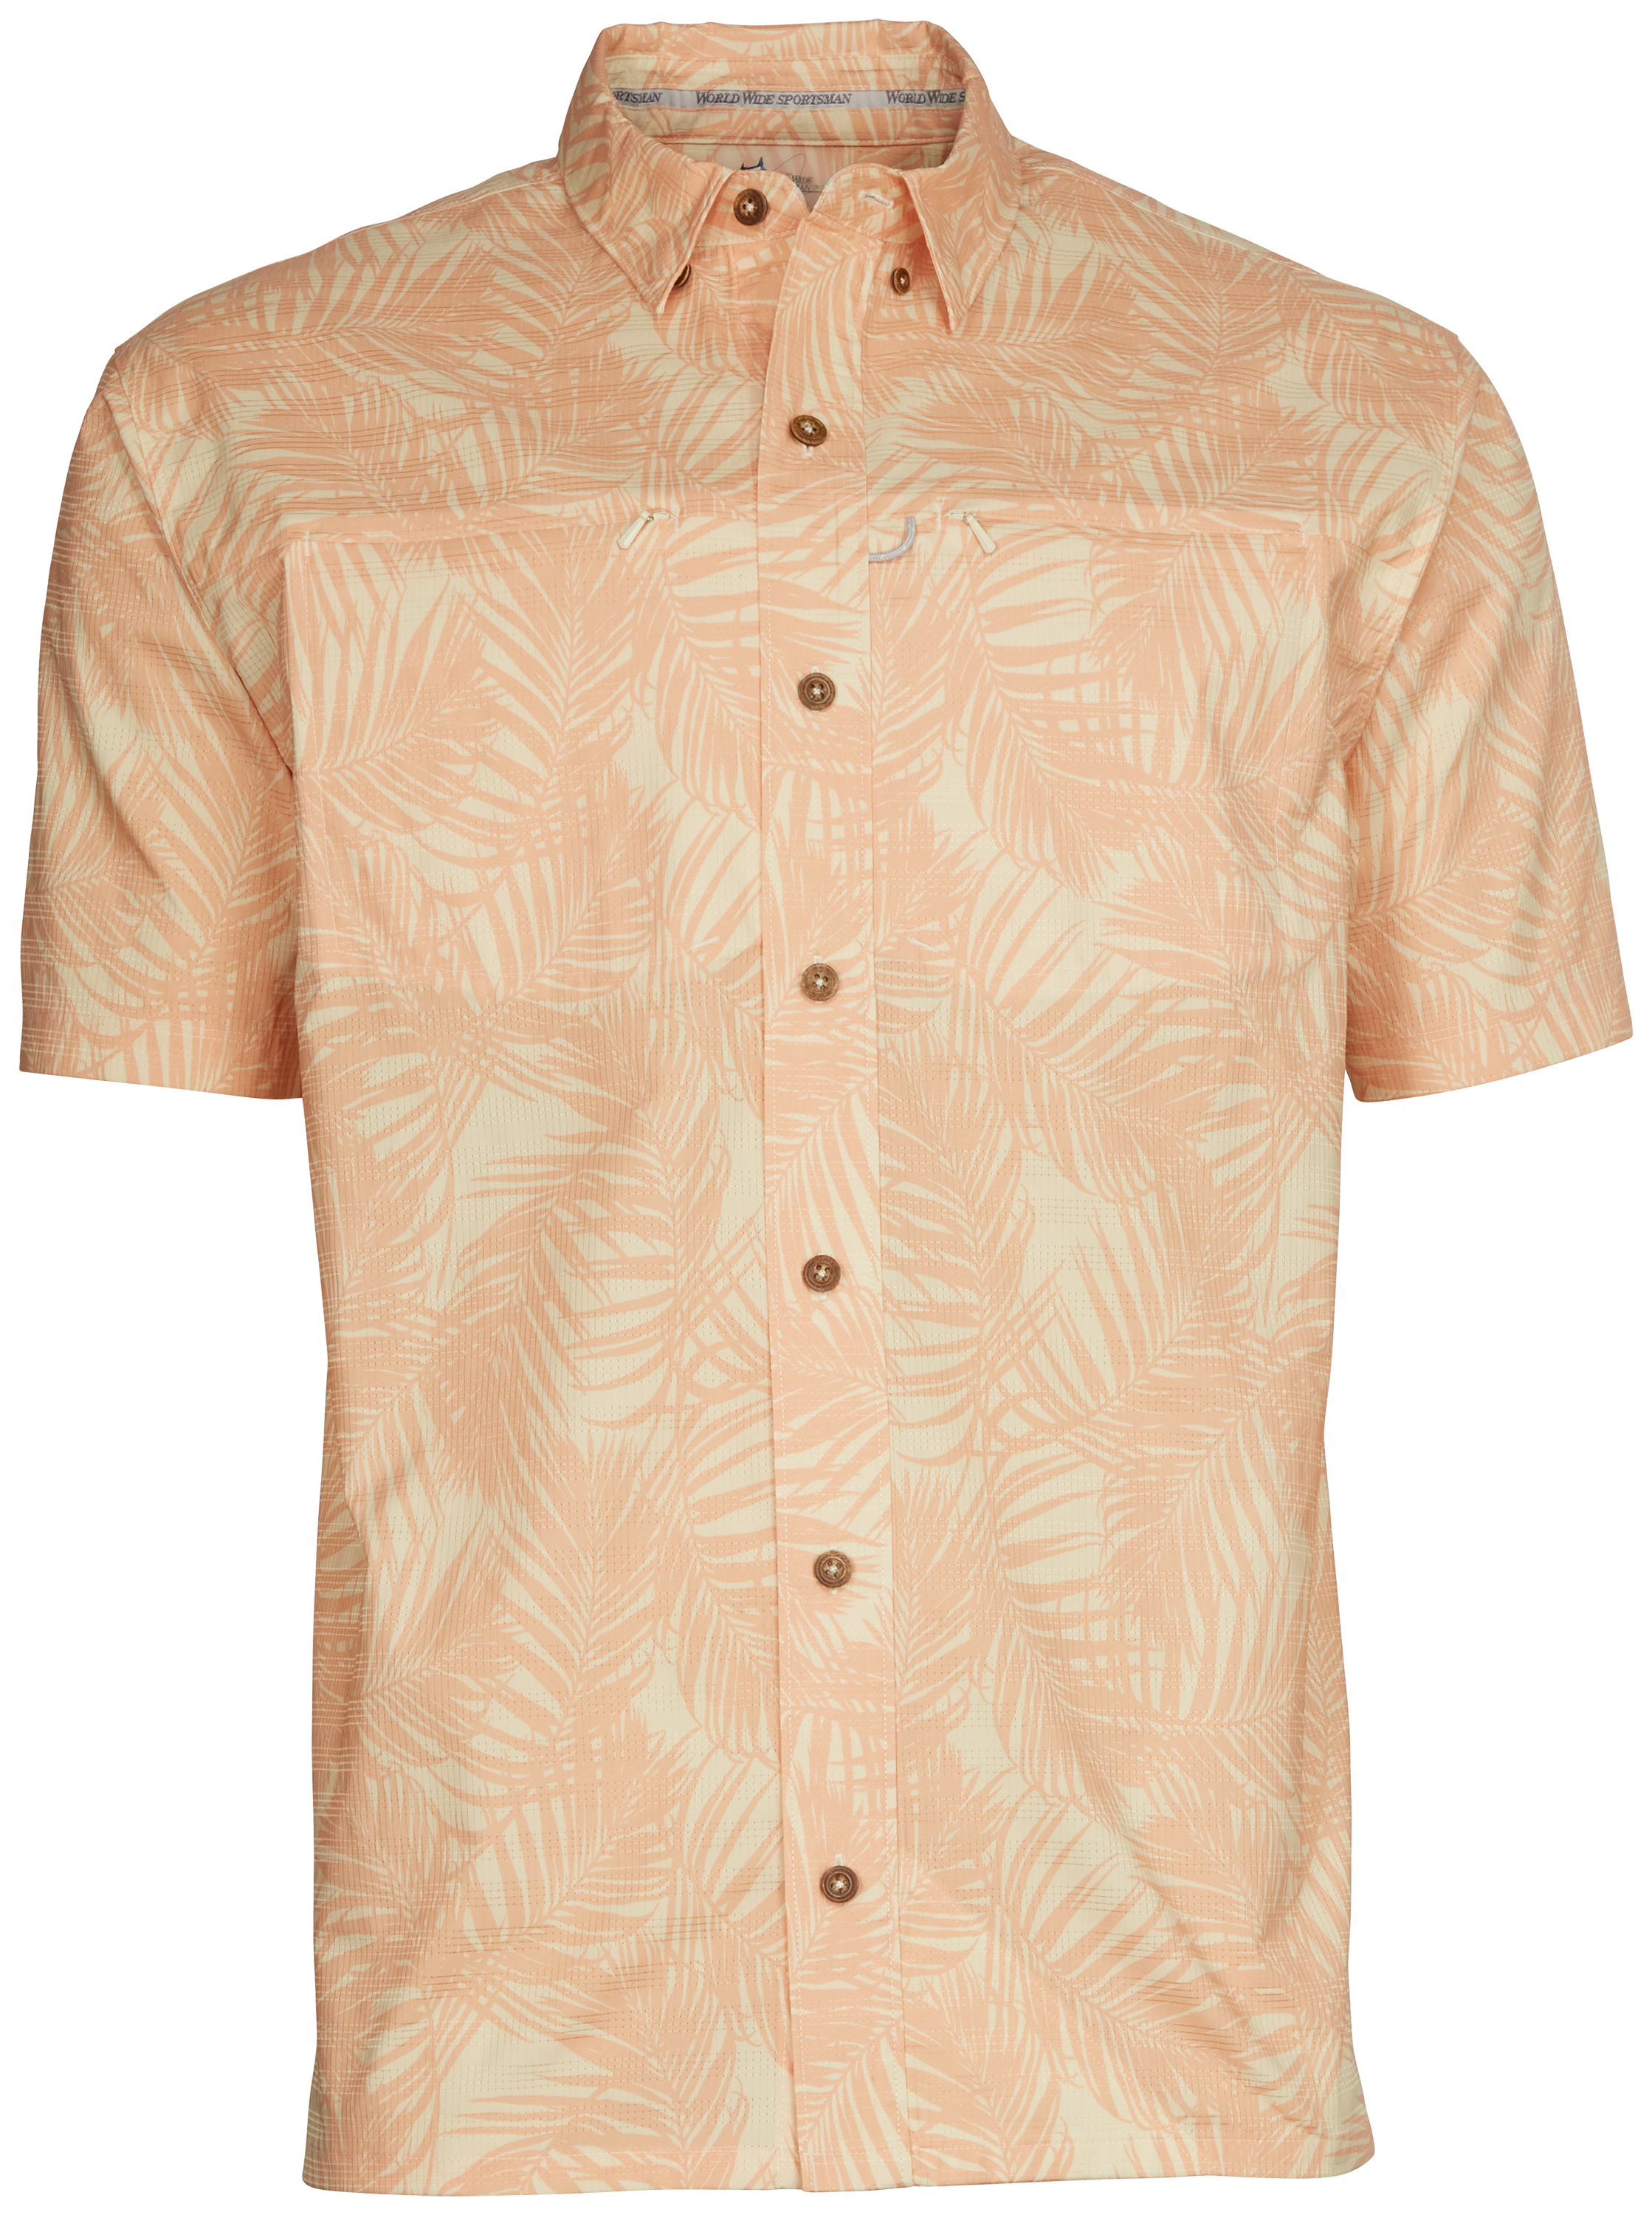 World Wide Sportsman Seacrest Print Short-Sleeve Button-Down Shirt for Men - Apricot Palms - M